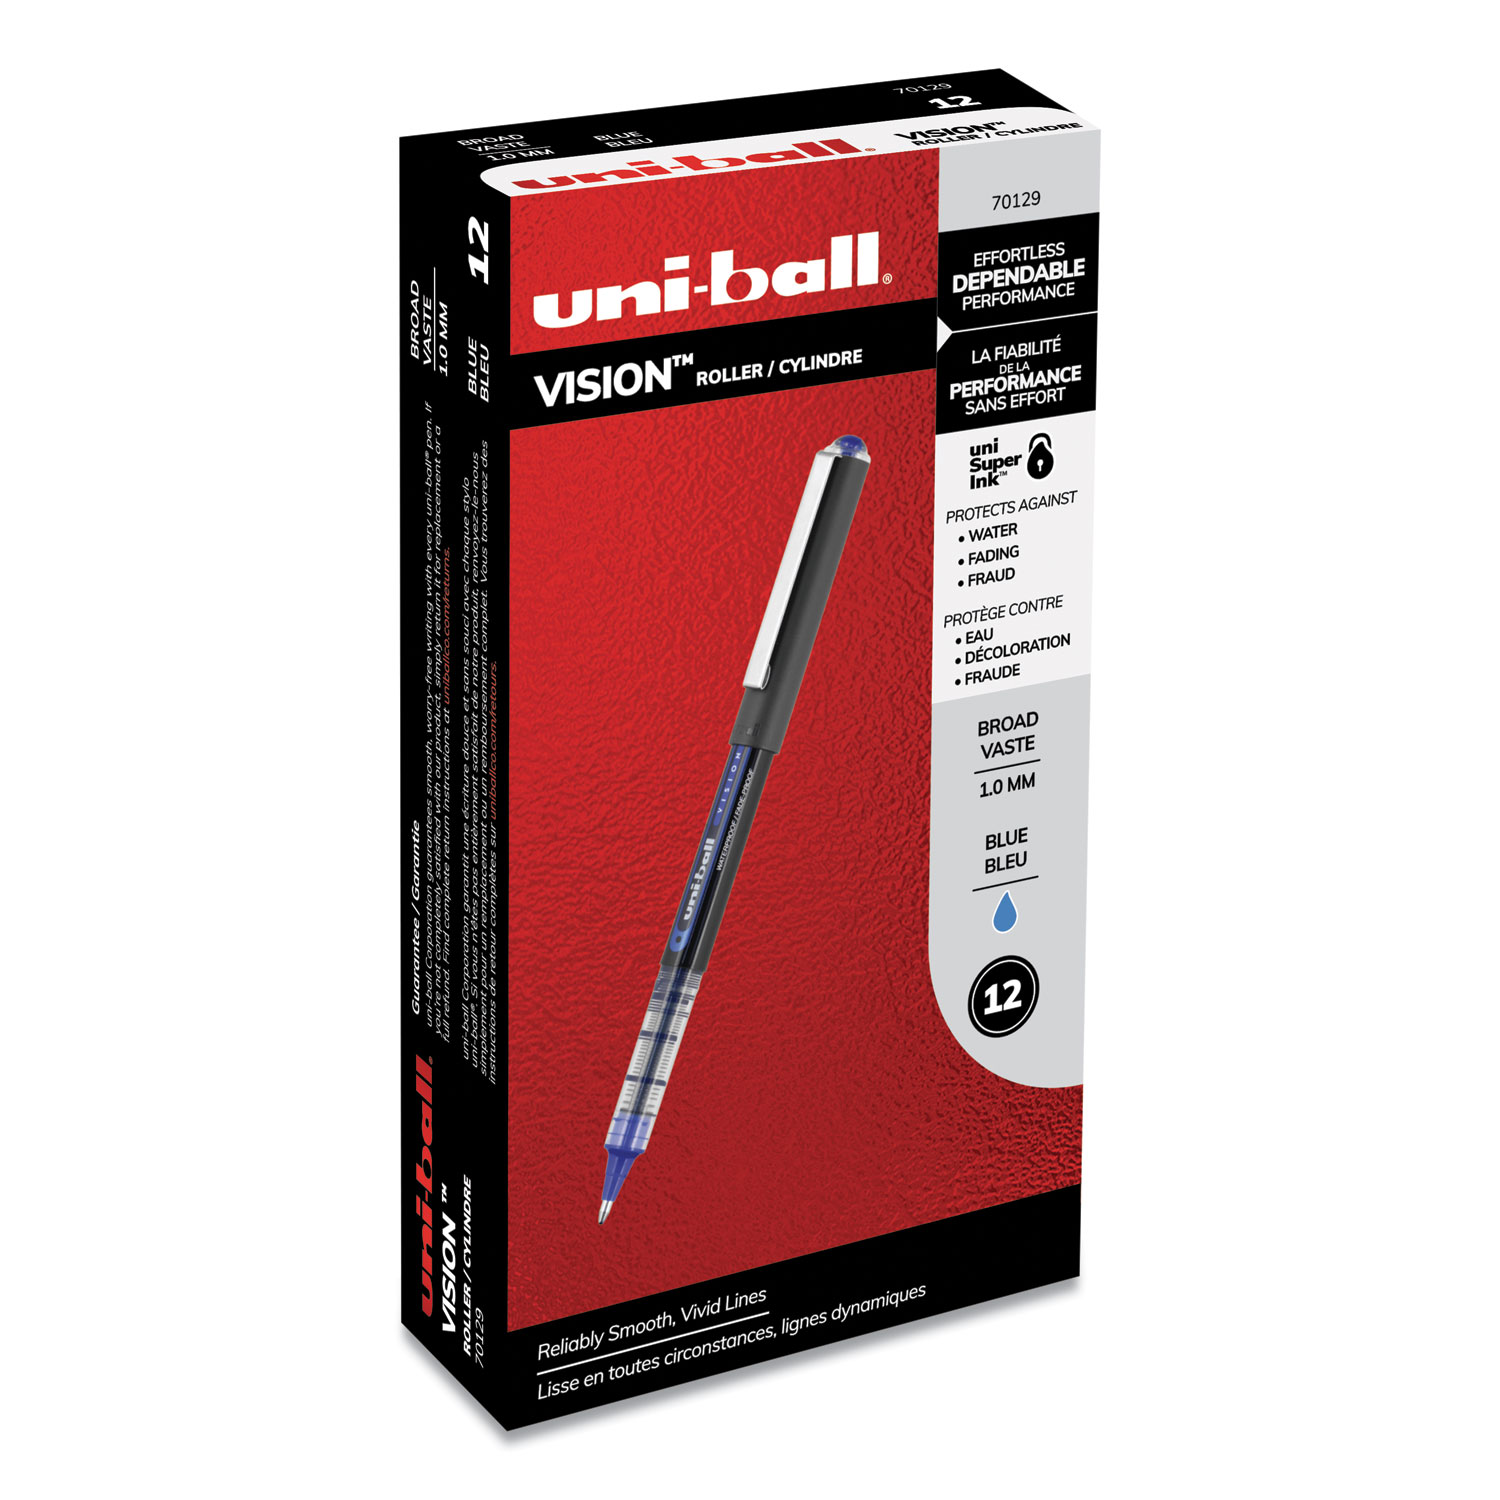 Stick Gel Pen Micro 0.38mm, Assorted Ink, Clear Barrel, 8/Set 